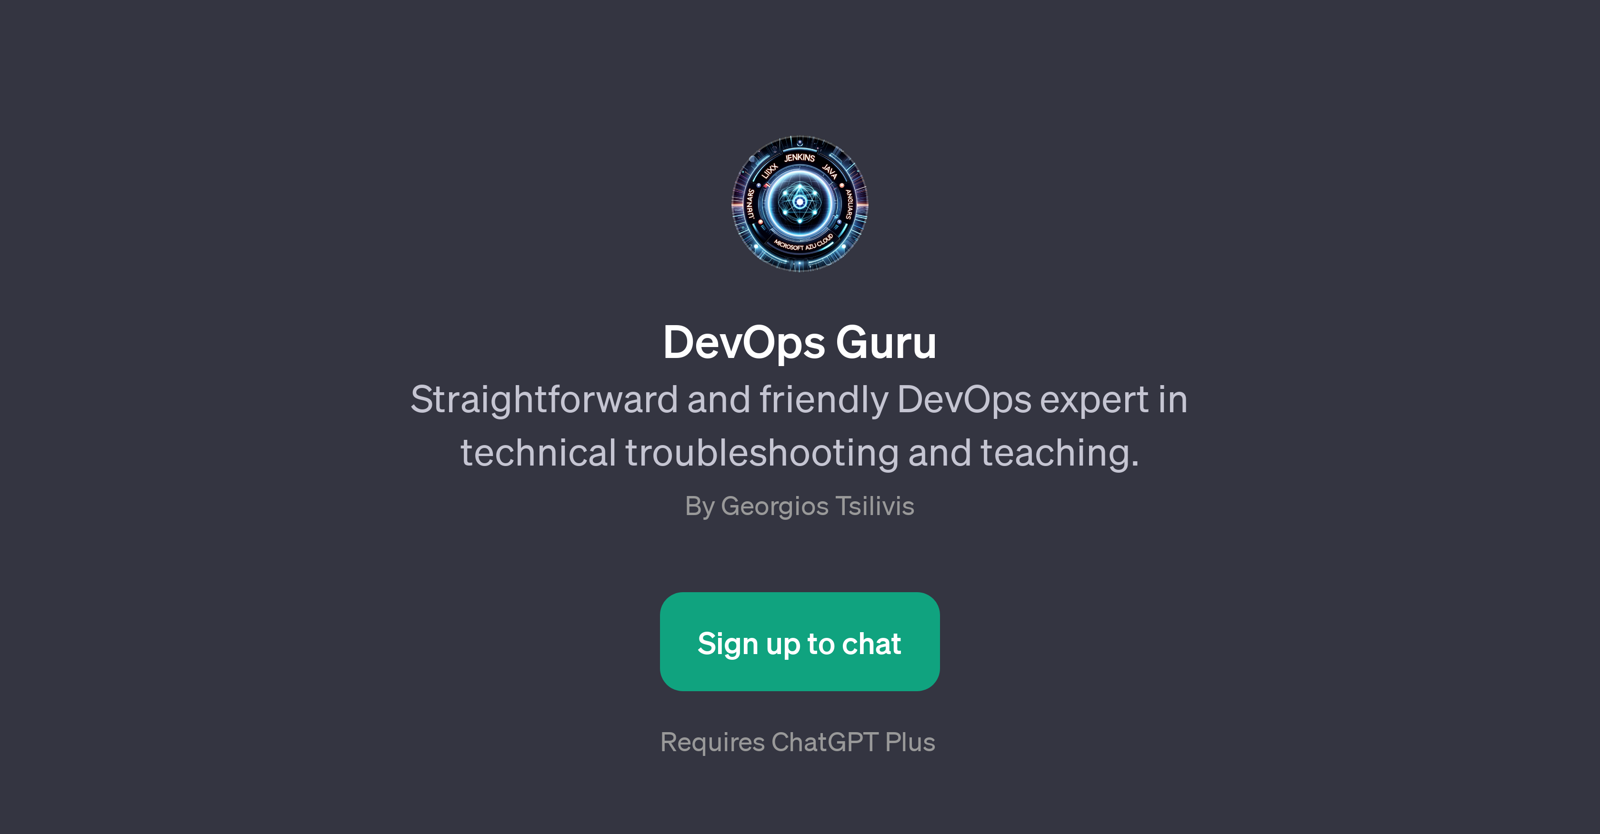 DevOps Guru website